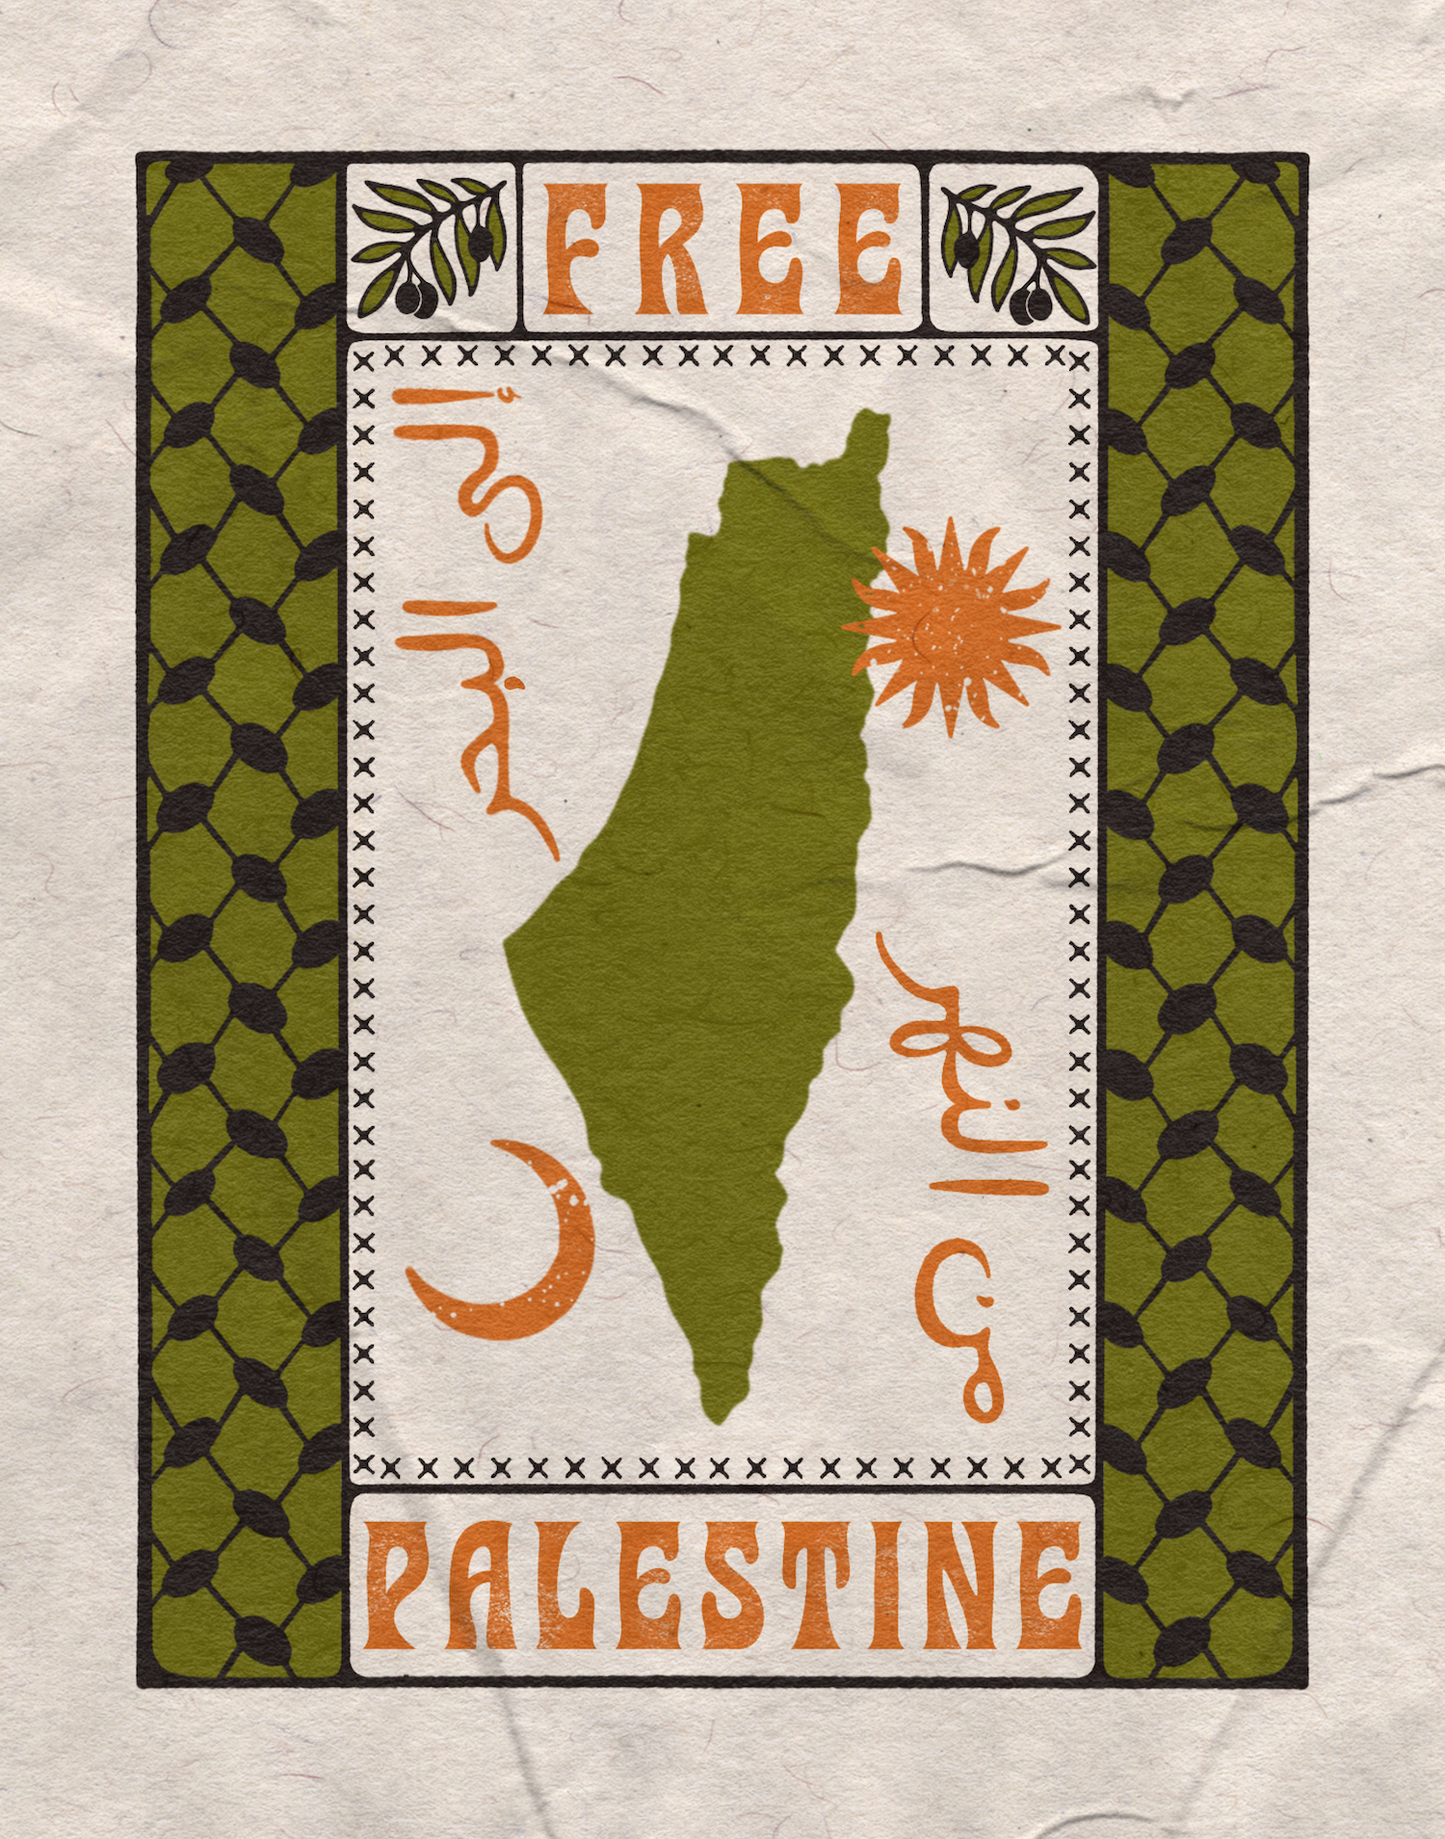 Free Palestine Poster (Digital Download)